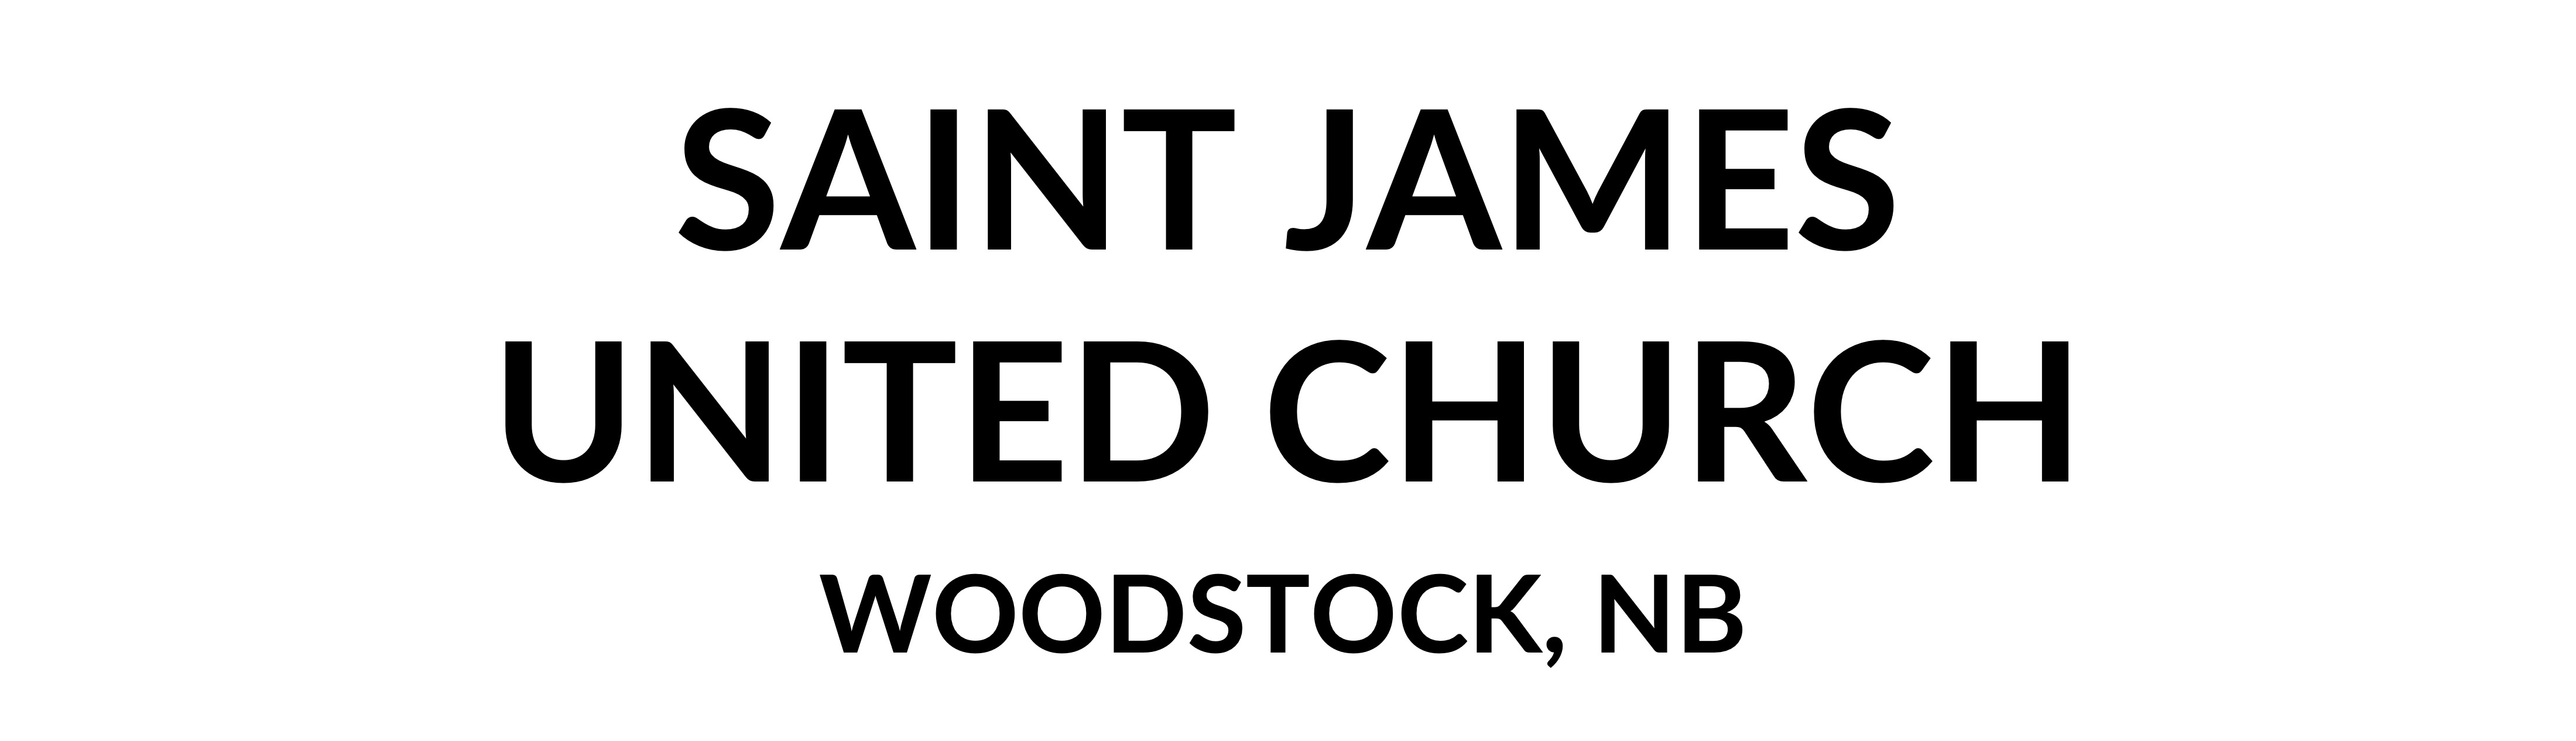 SAINT JAMES UNITED CHURCH